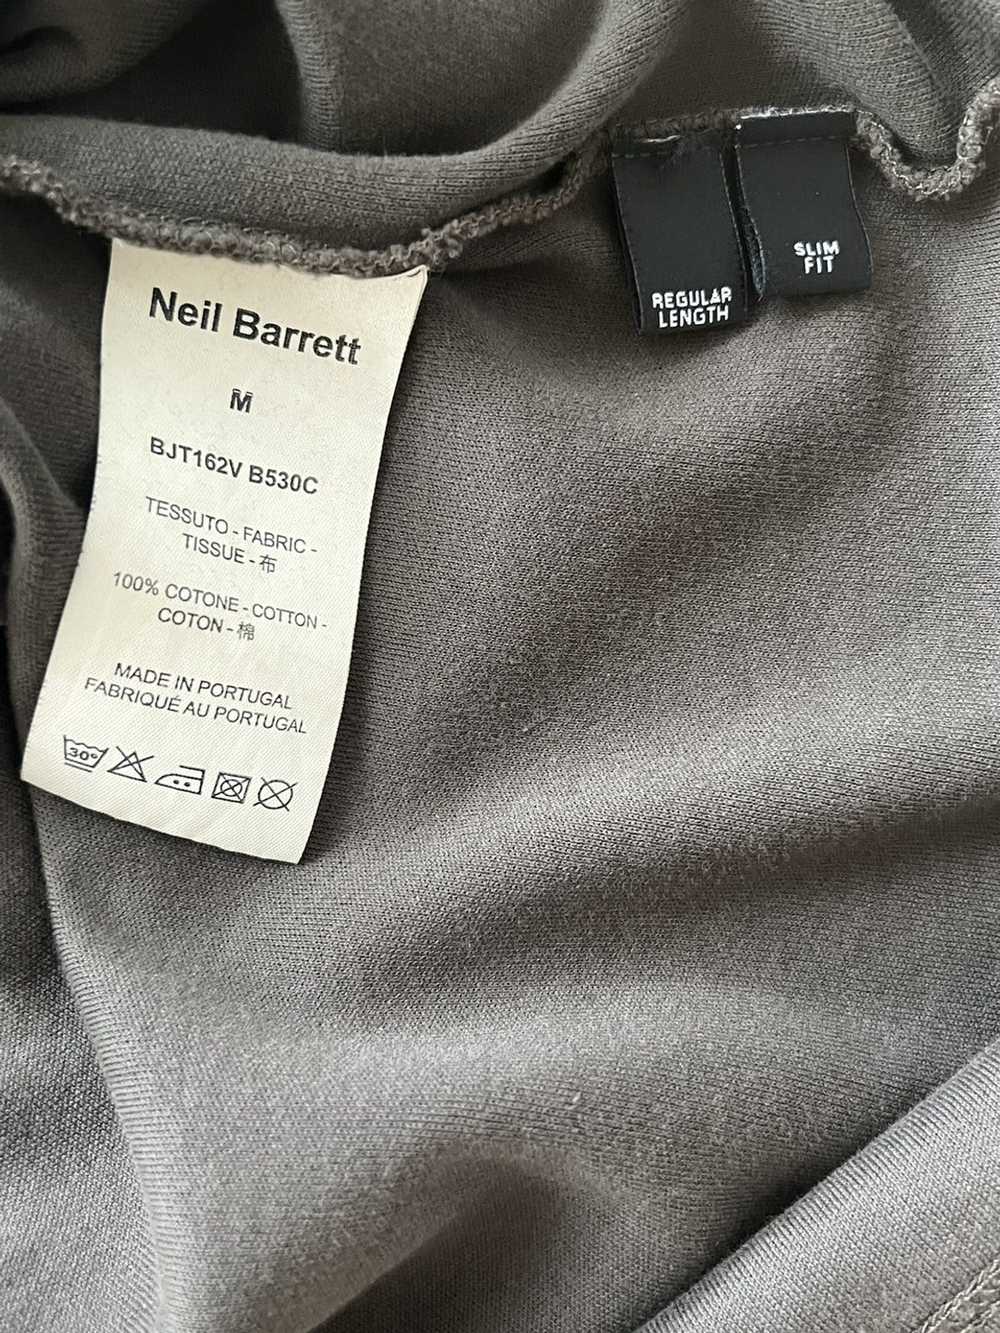 Neil Barrett Neil Barrett Long sleeve Shirt - image 5